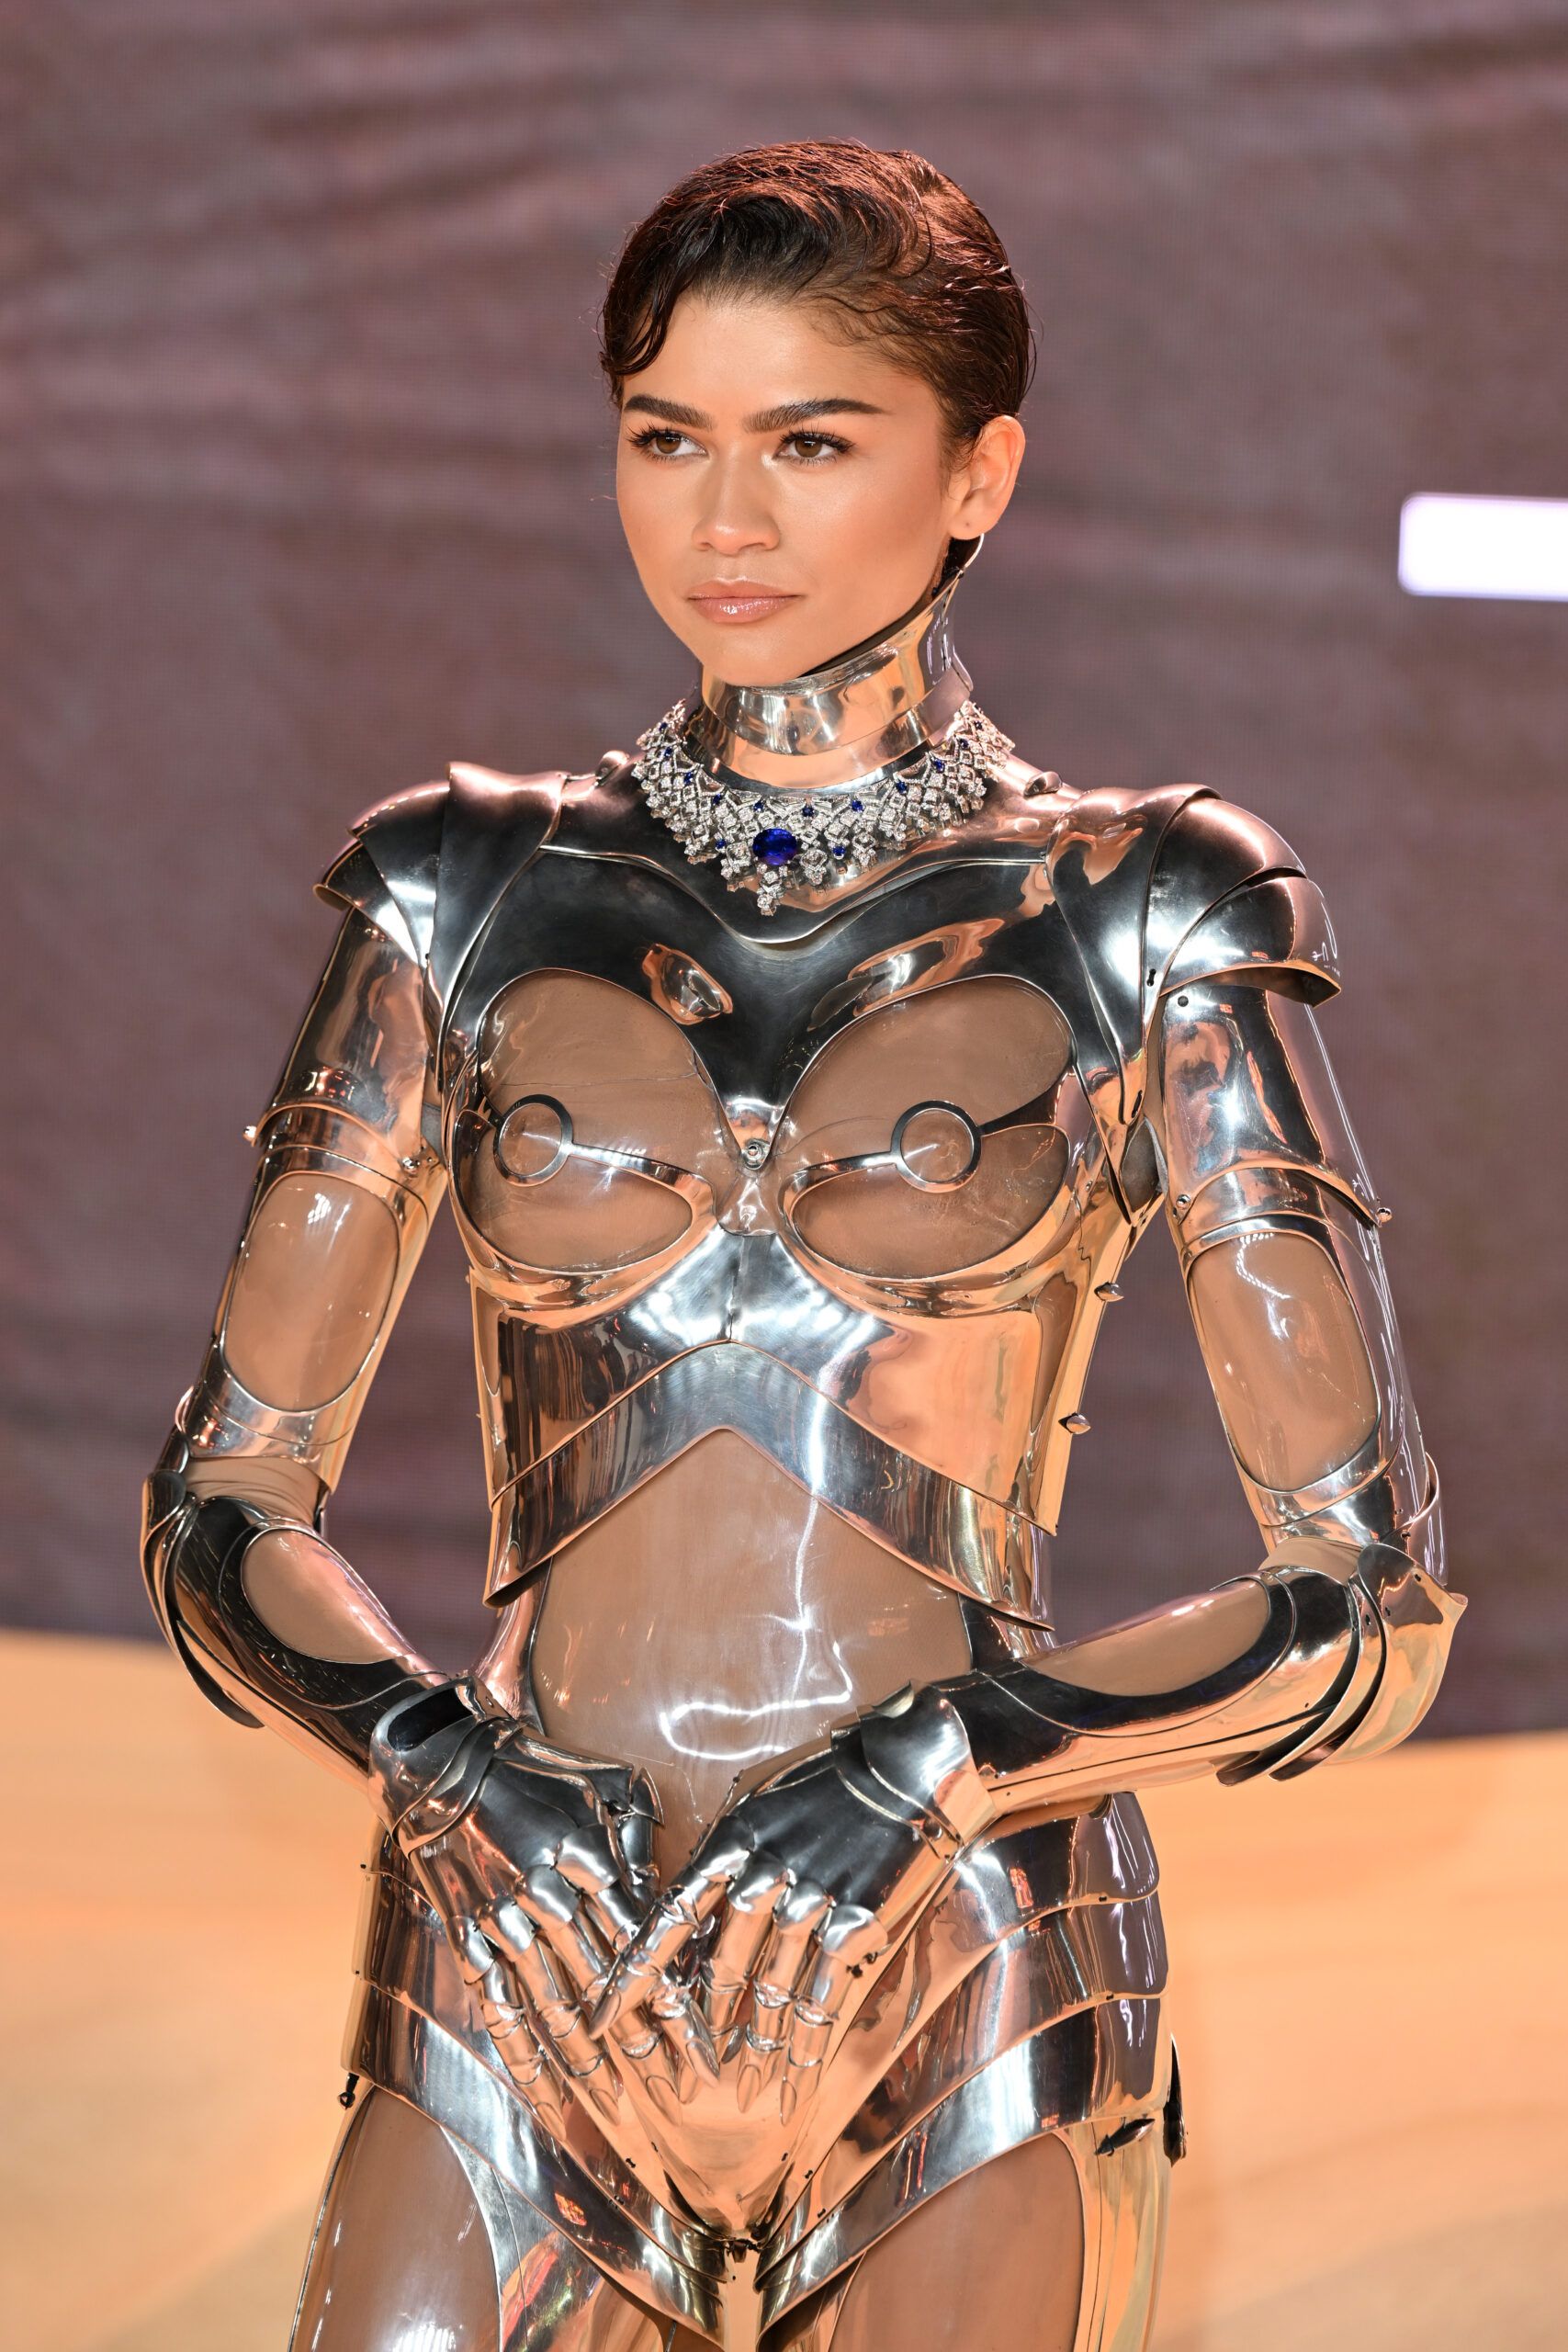 Wardrobe Breakdown: Zendaya Ất Dune Part 2 World Premiere In Couture Silver Robotic Look In London